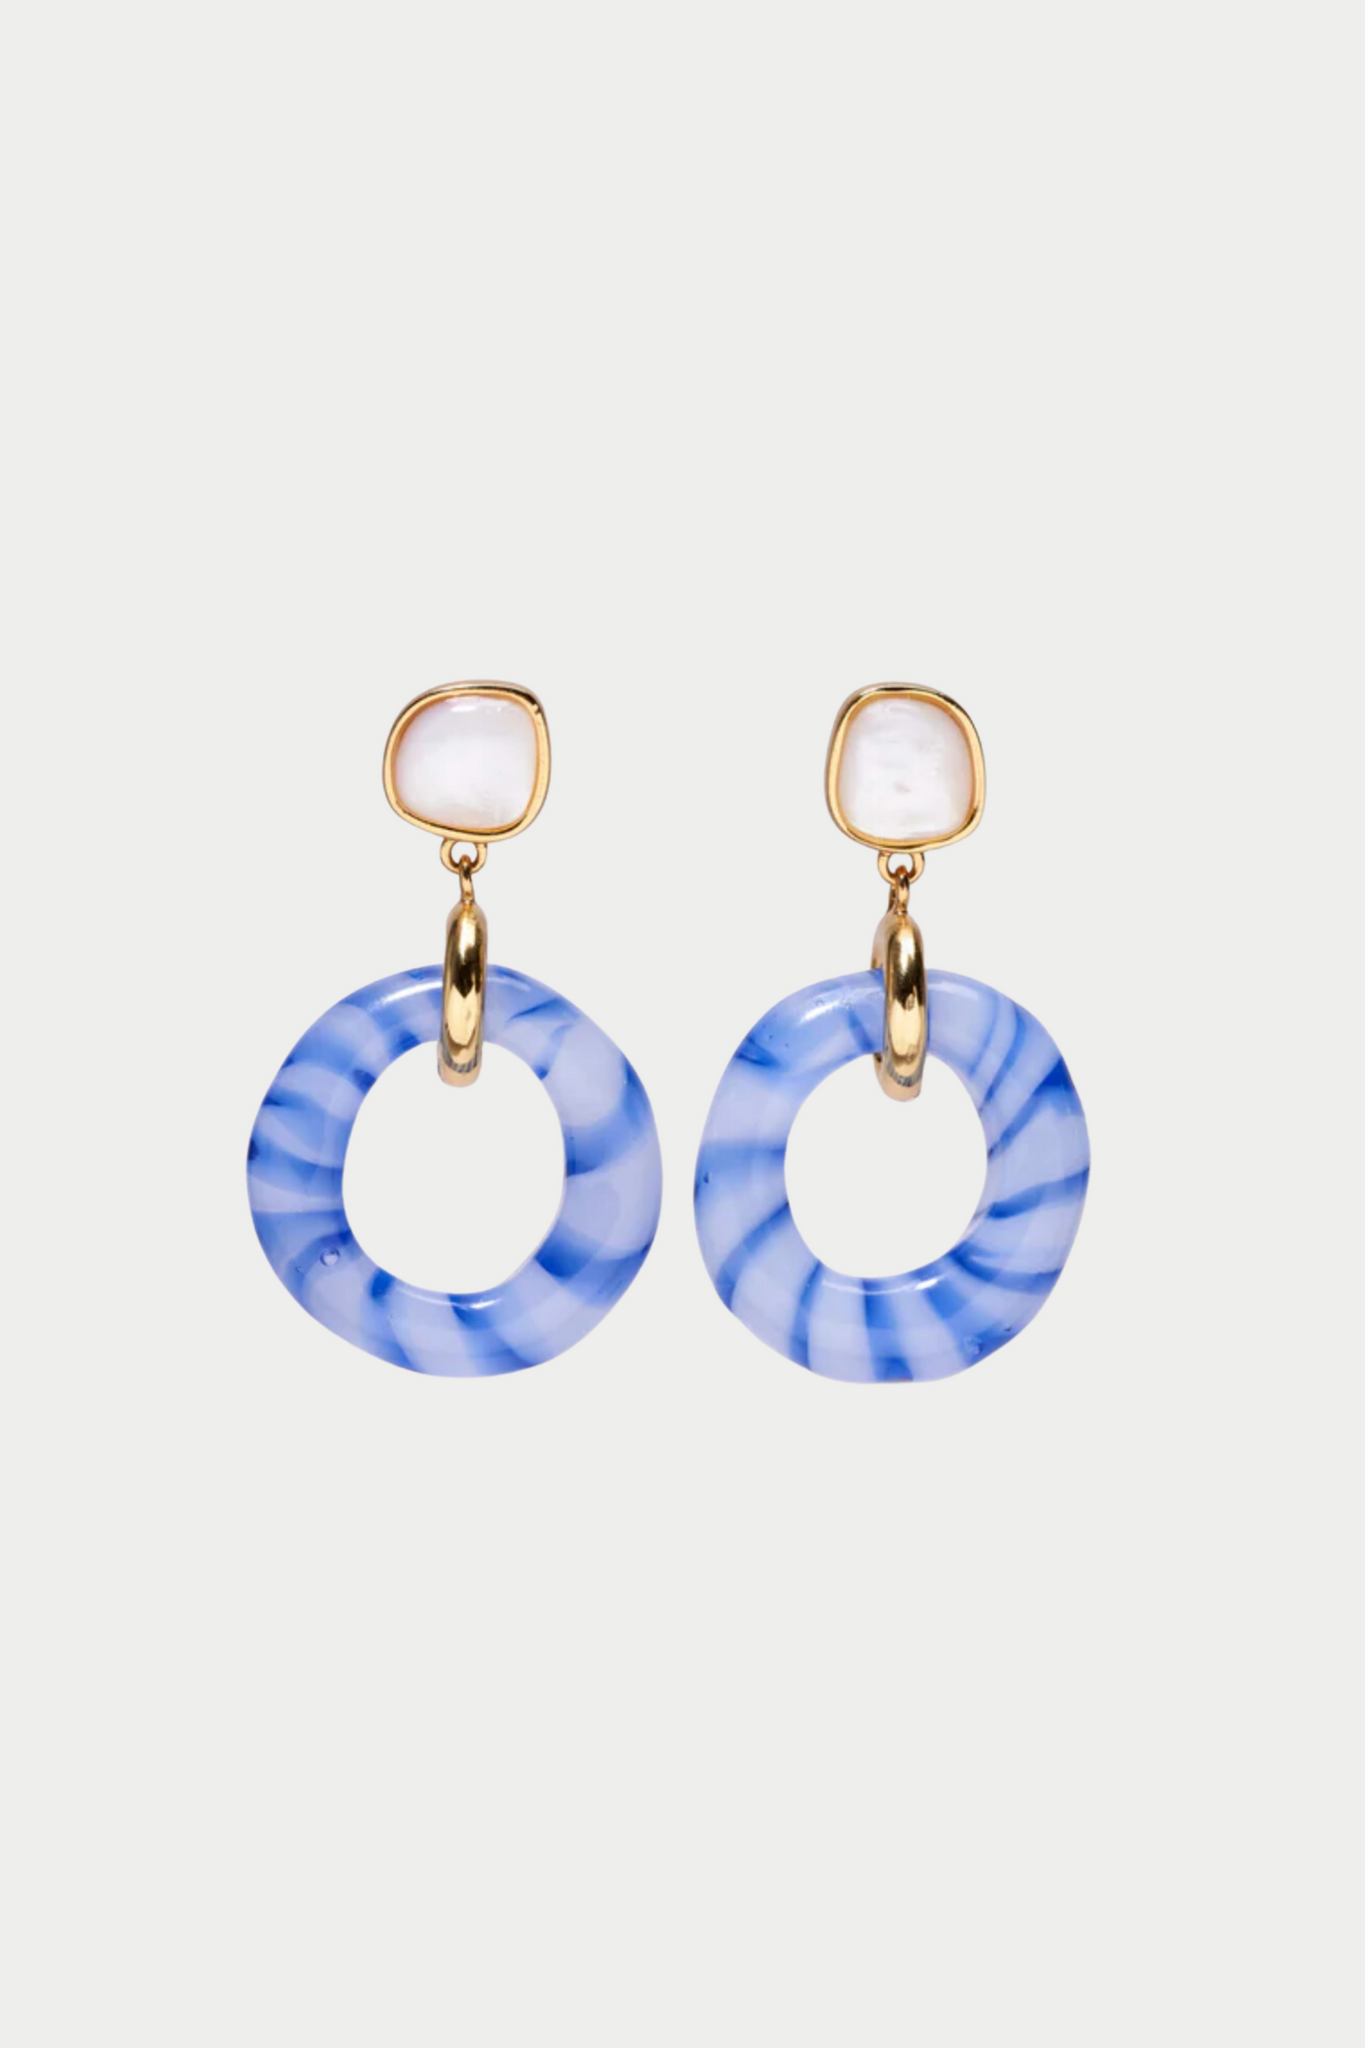 Lizzie Fortunato Jewels - Madeira Glass Earrings, Pearl